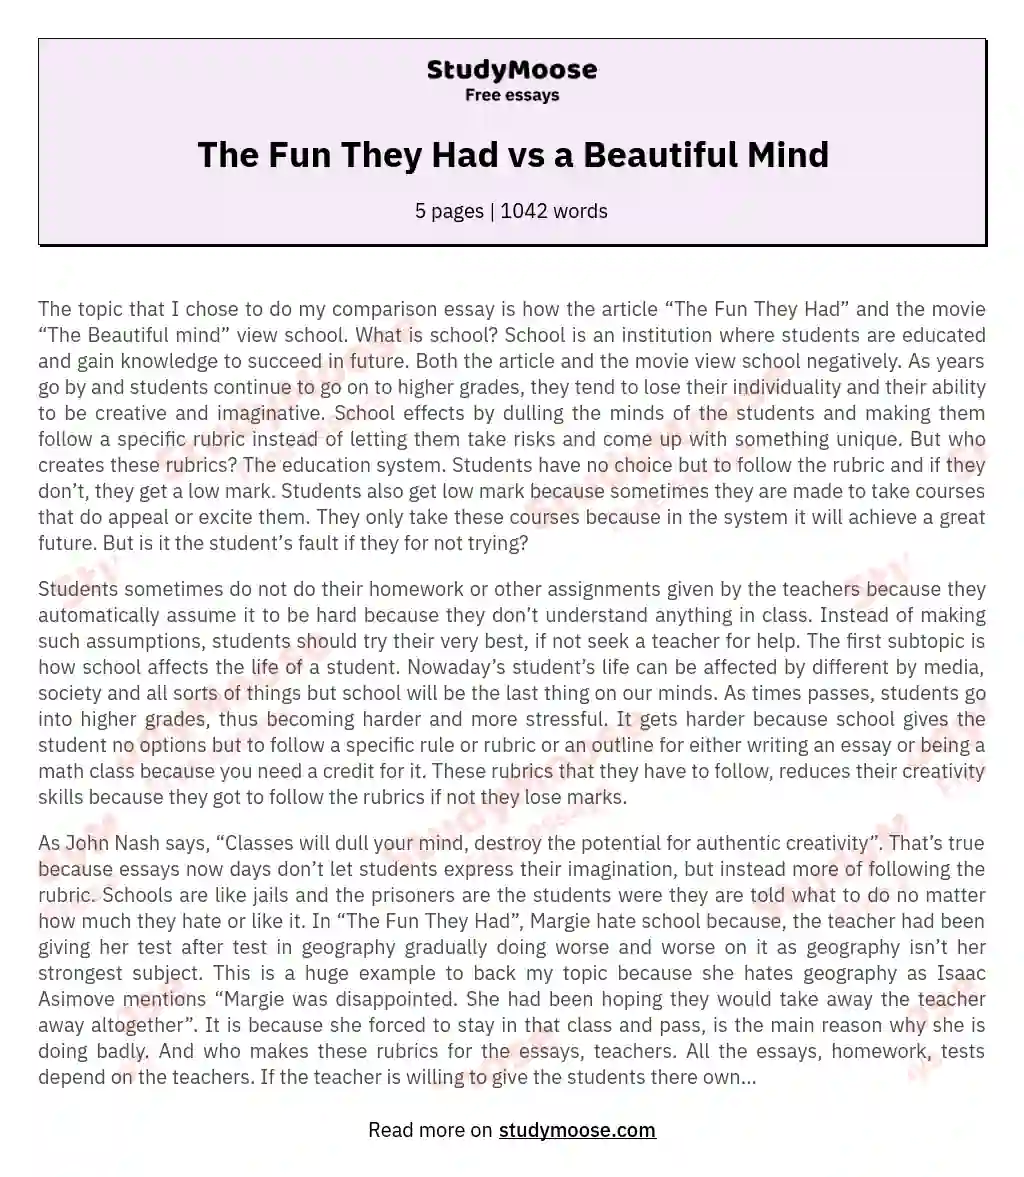 The Fun They Had vs a Beautiful Mind